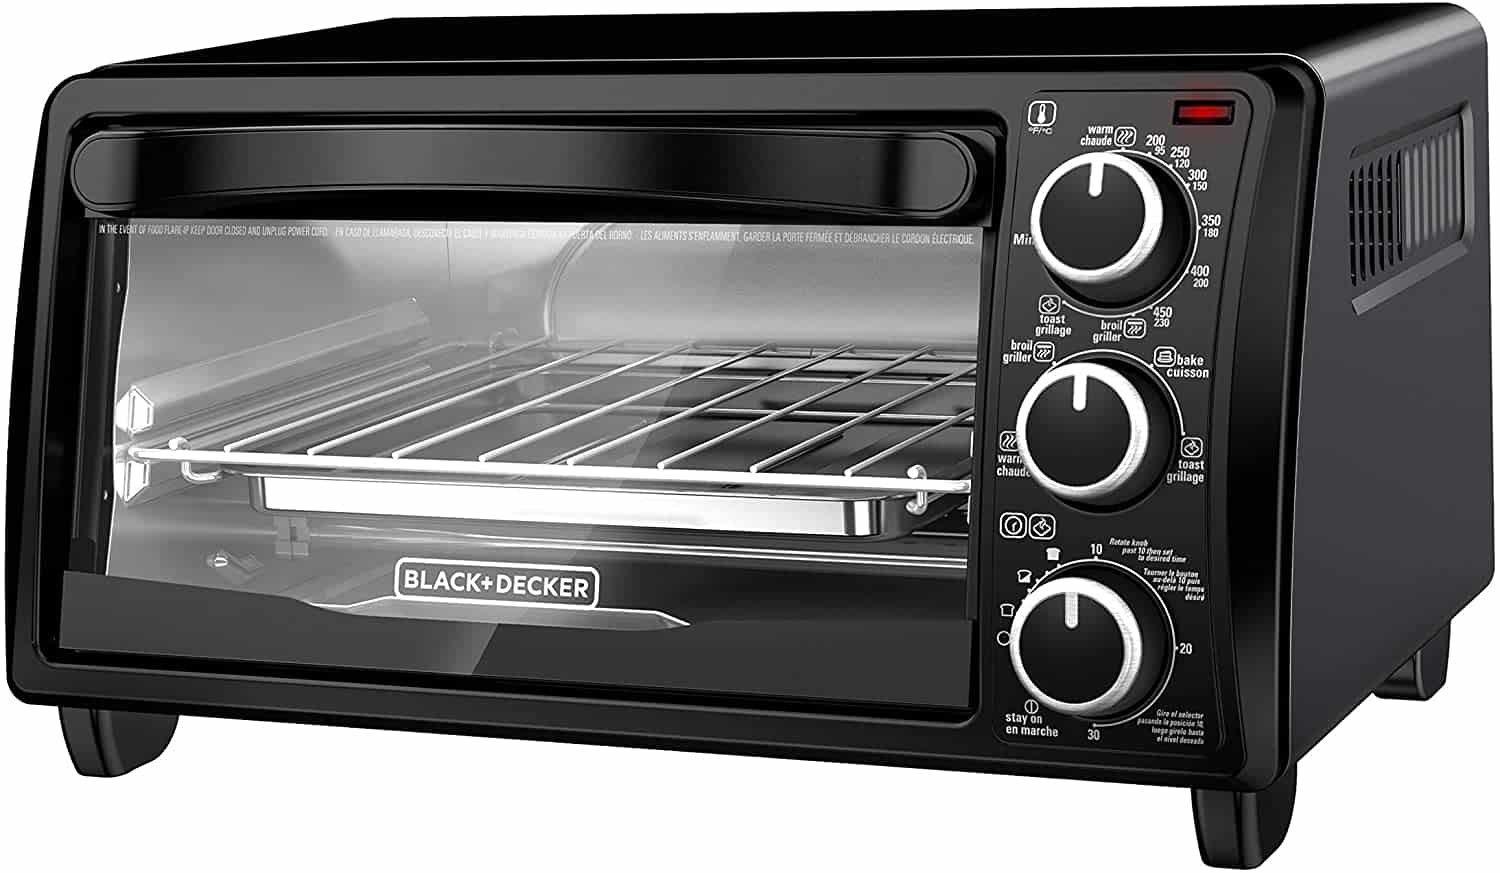 Black + Decker 4-Slice Toaster Oven Review